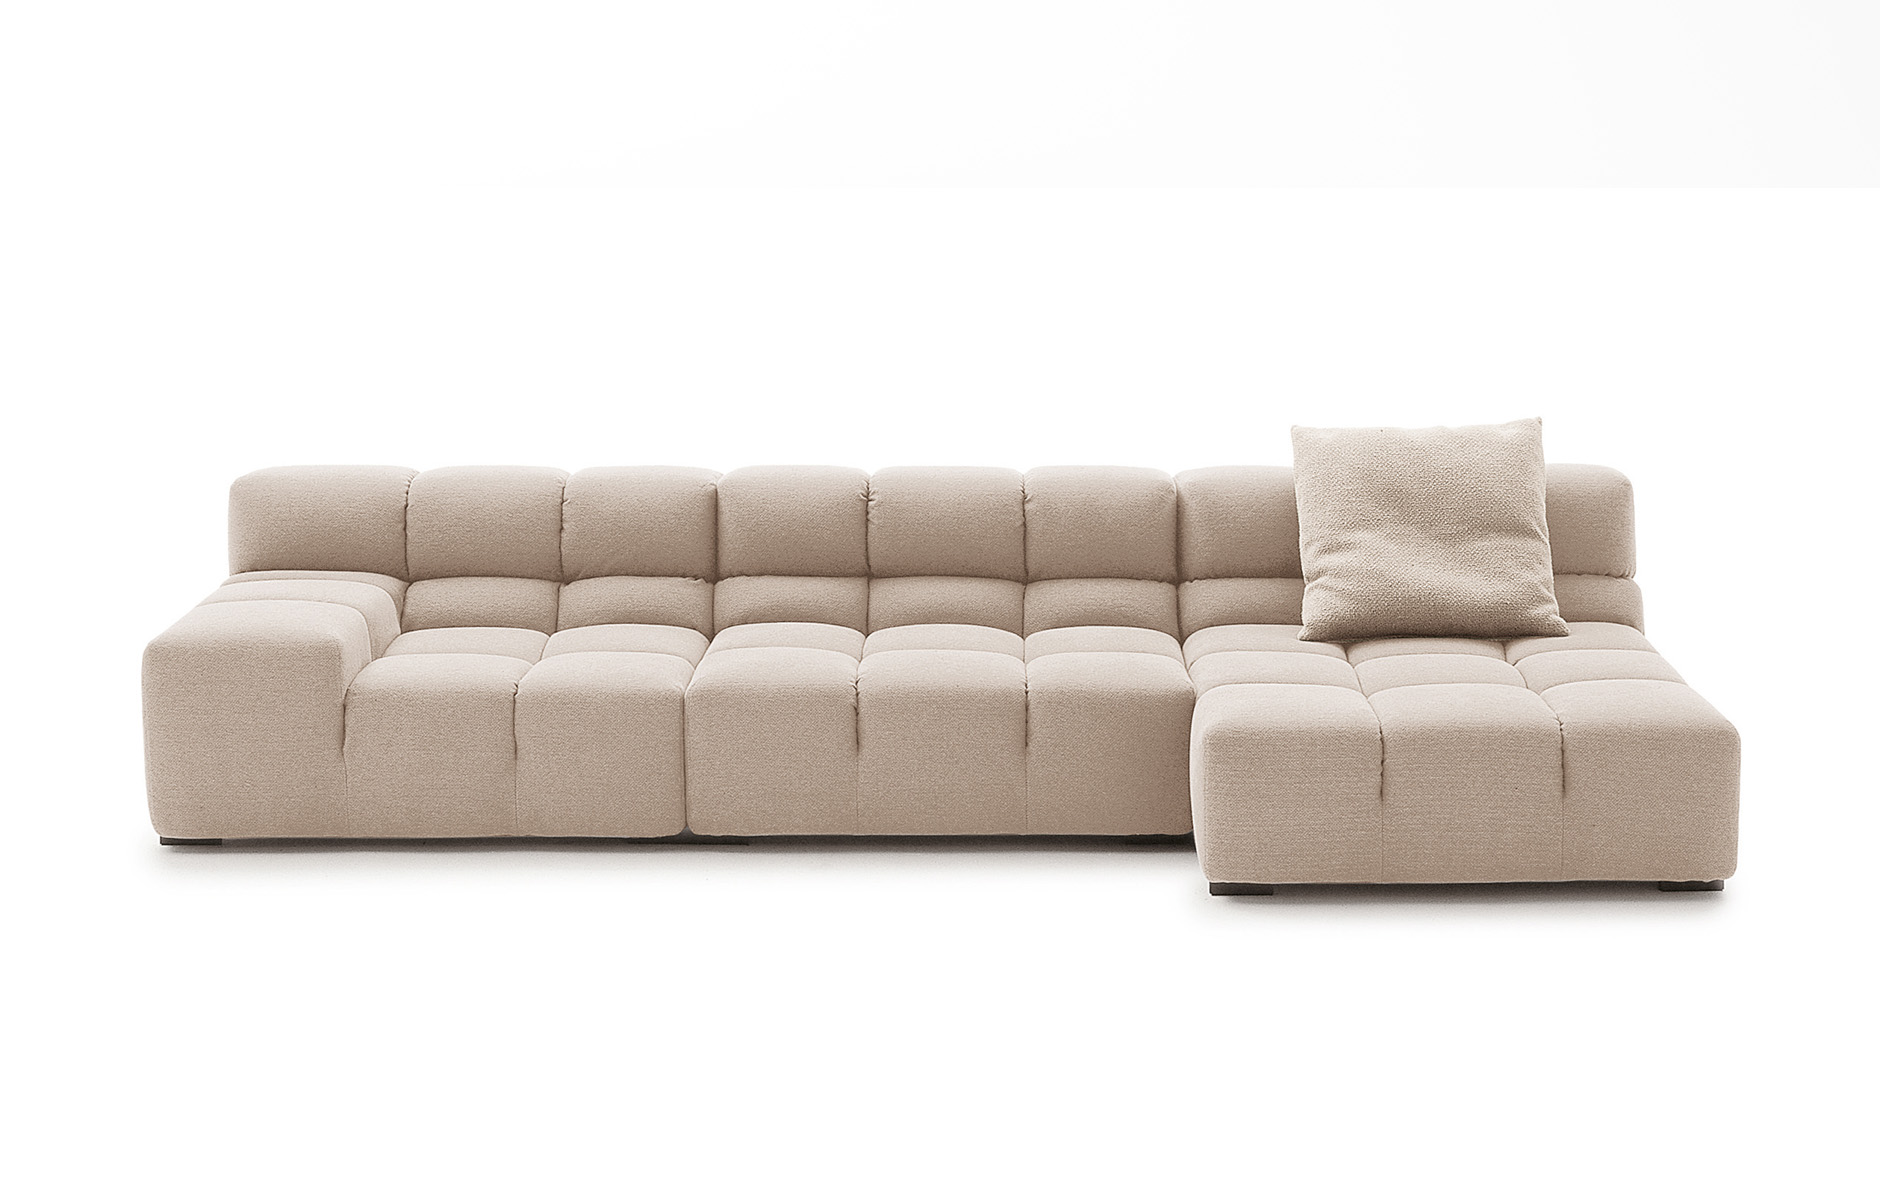 Tufty-Time sofa designed by Patricia Urquiola for B&B Italia. Photo c/o B&B Italia.